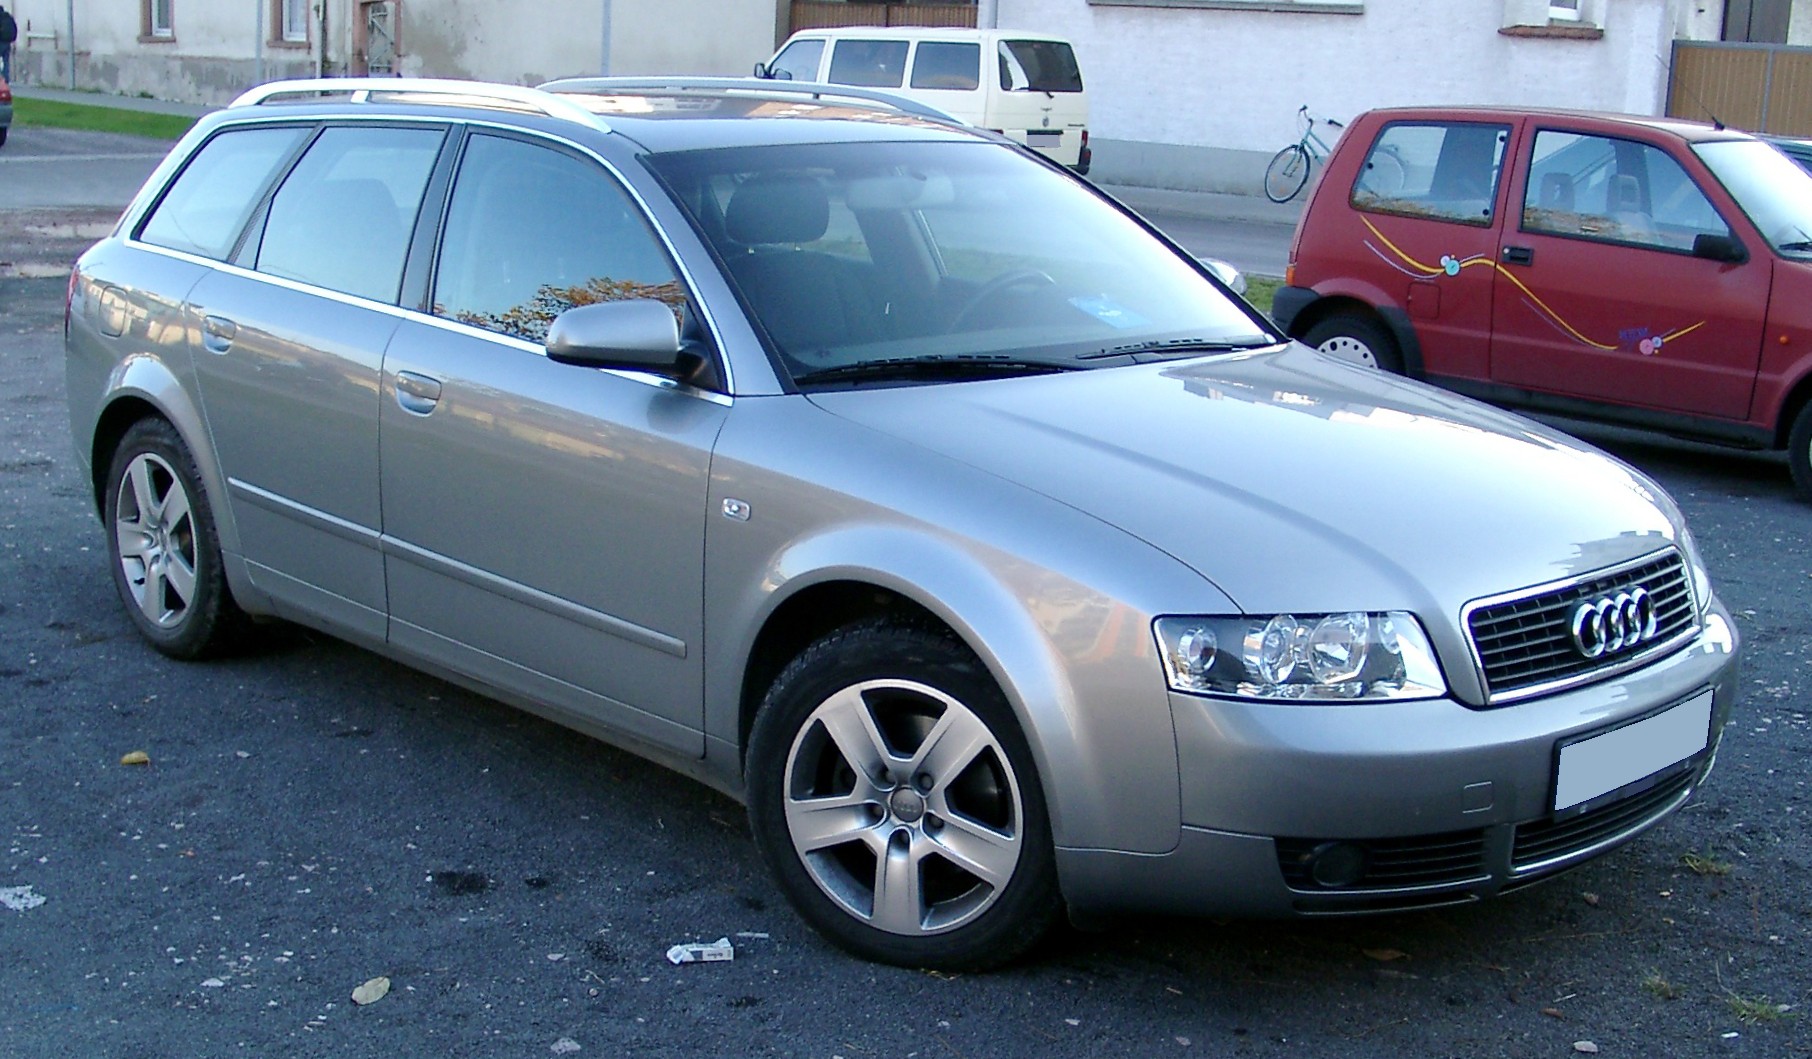 https://upload.wikimedia.org/wikipedia/commons/d/da/Audi_A4_B6_Kombi_front_20071115.jpg